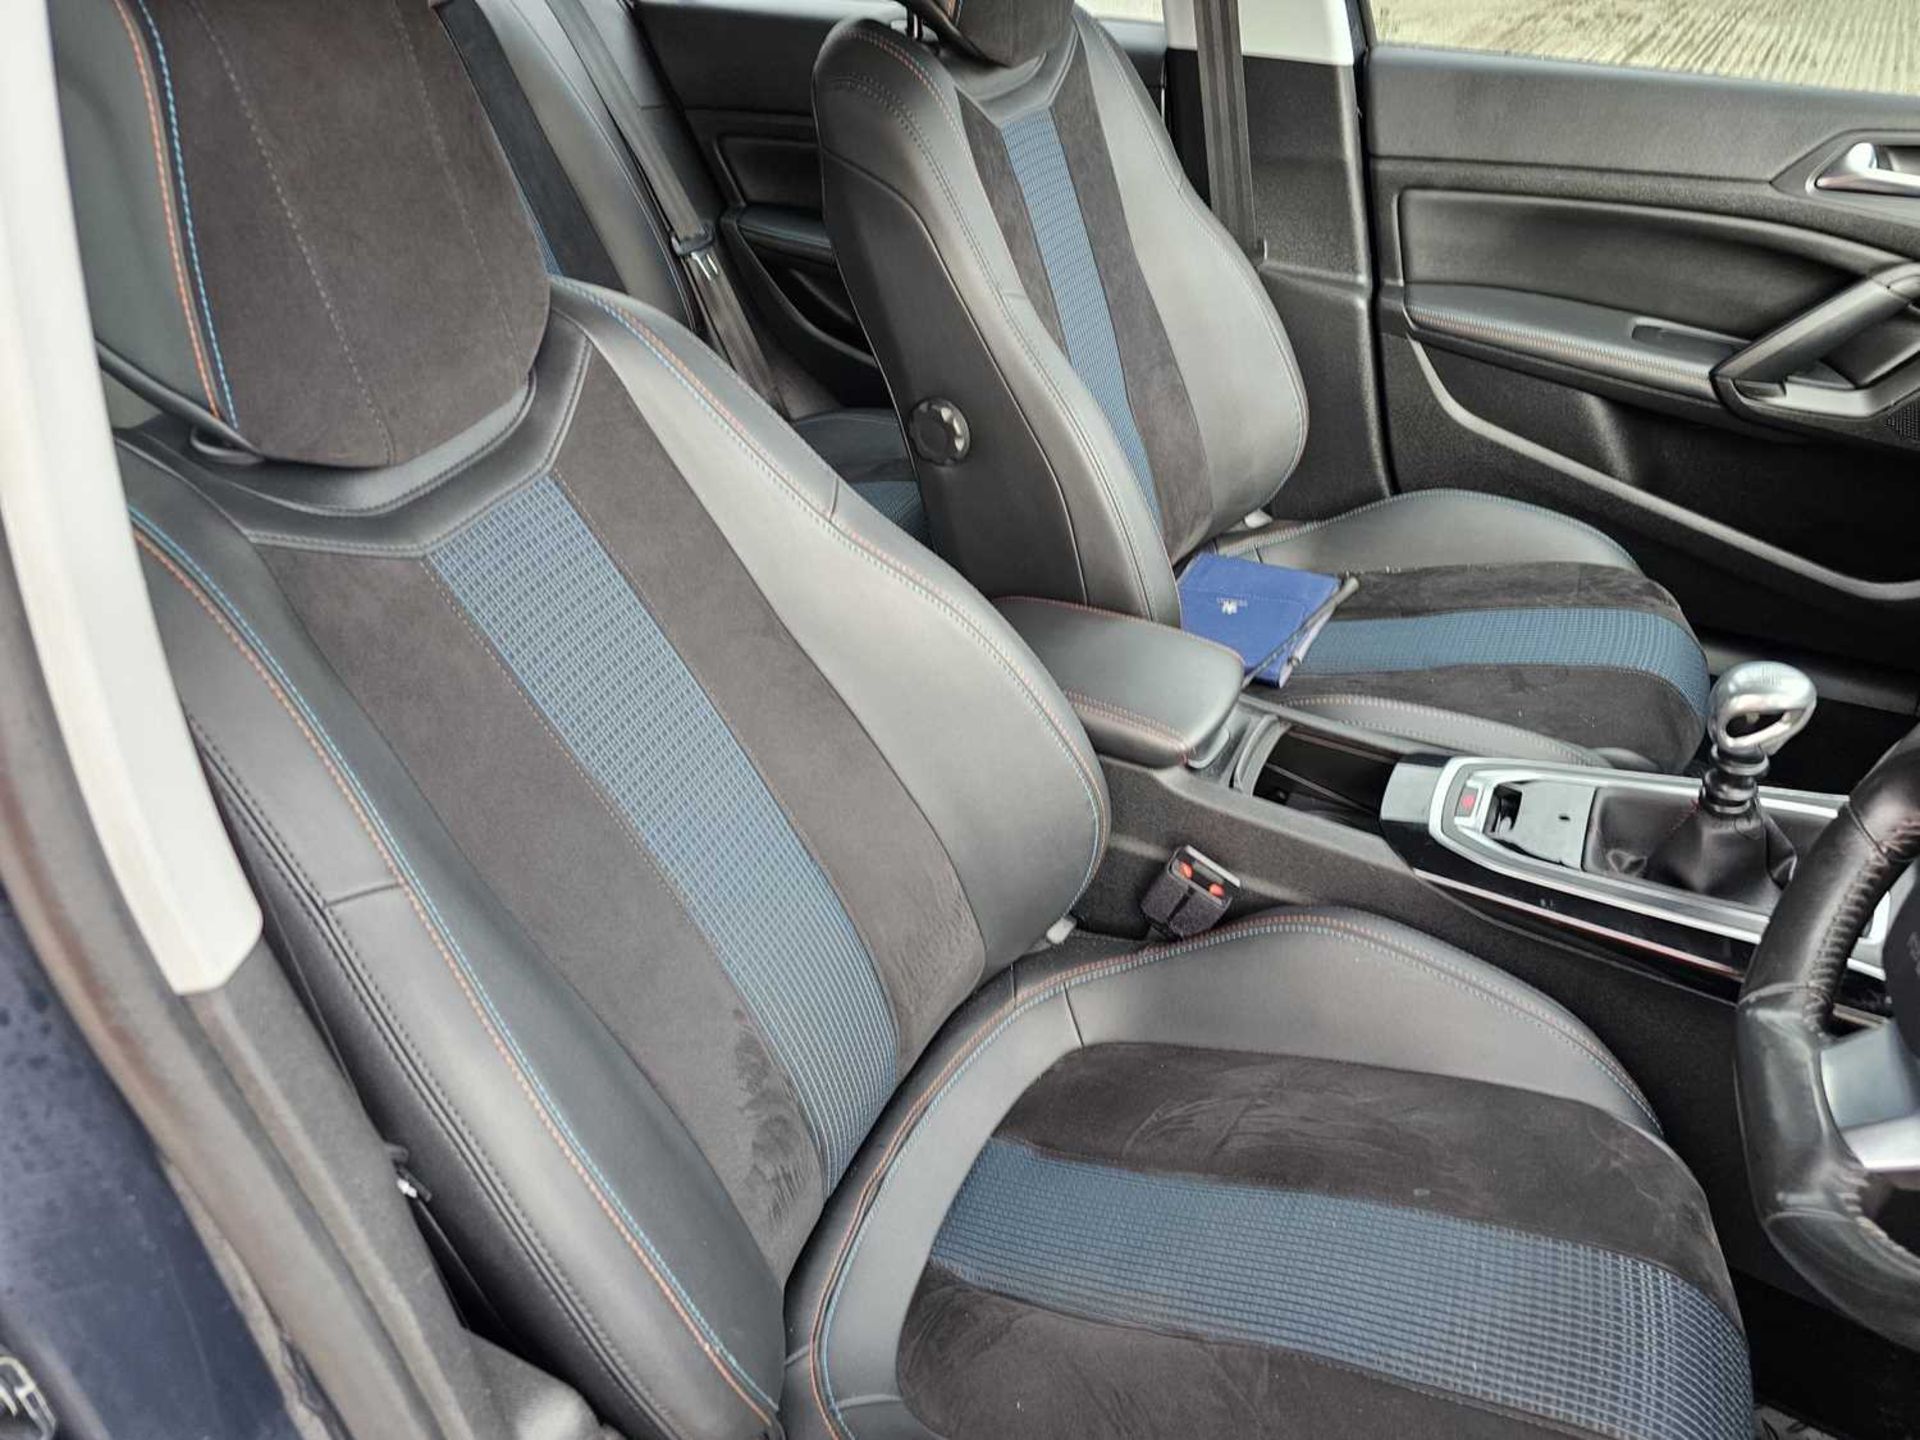 2014 Peugeot 308, 6 Speed, Parking Sensors, Half Leather, Bluetooth, Cruise Control, A/C (Reg. Docs. - Image 24 of 28